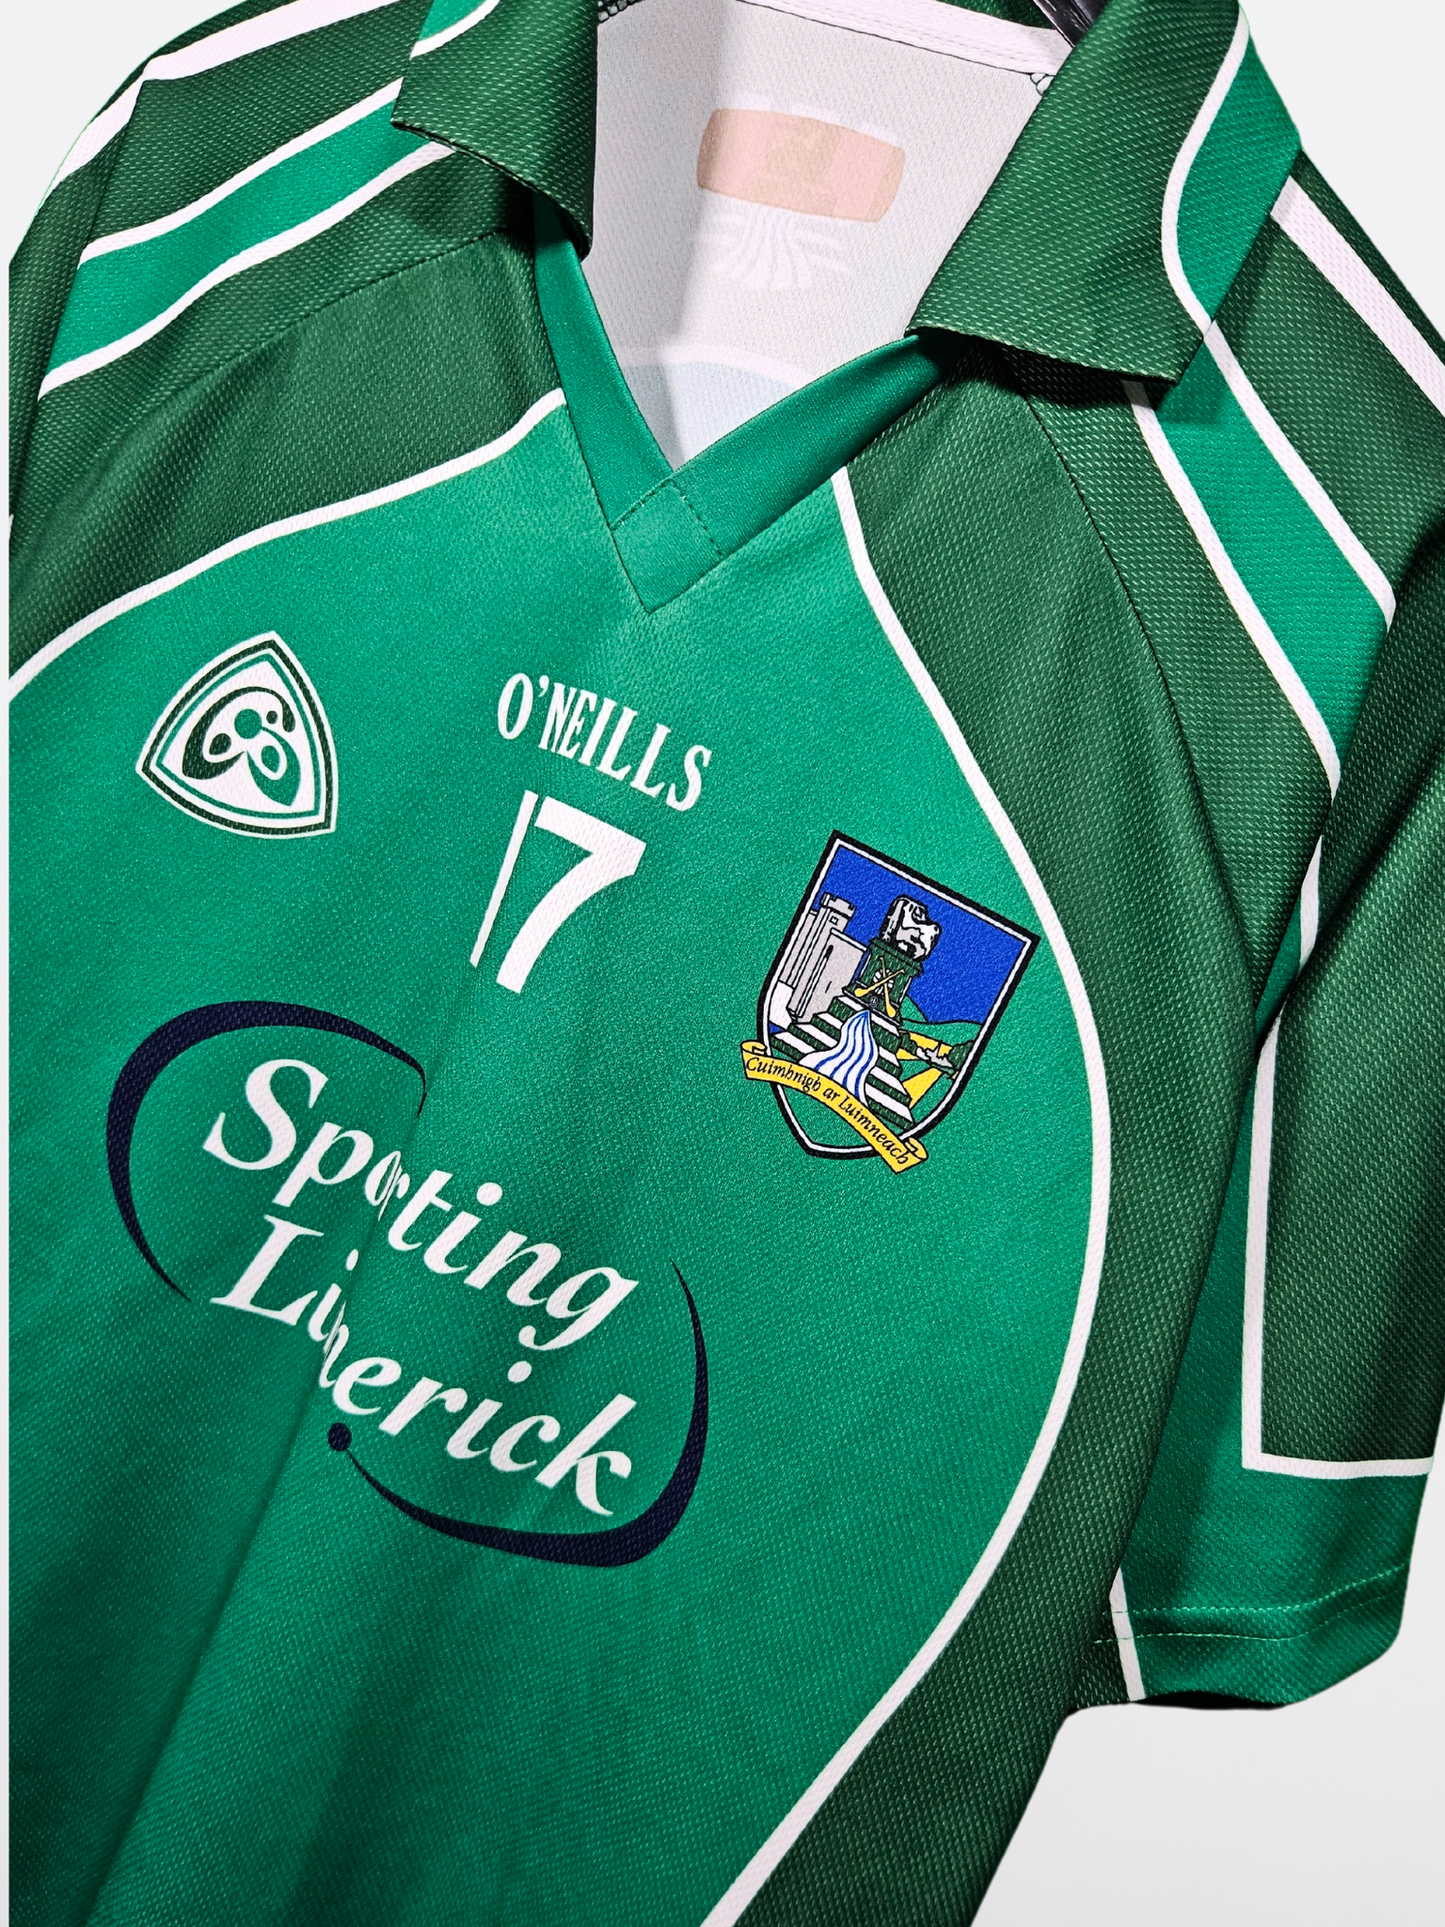 Limerick 2008 (L) - Match Worn #17